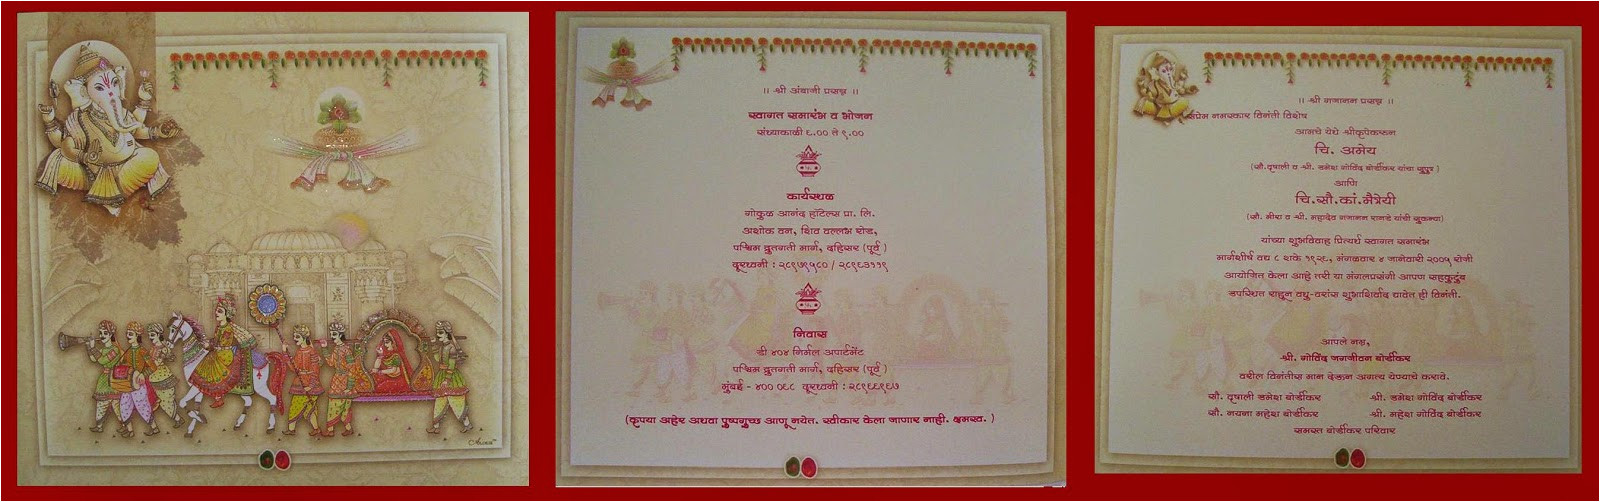 wedding invitation wordings in marathi